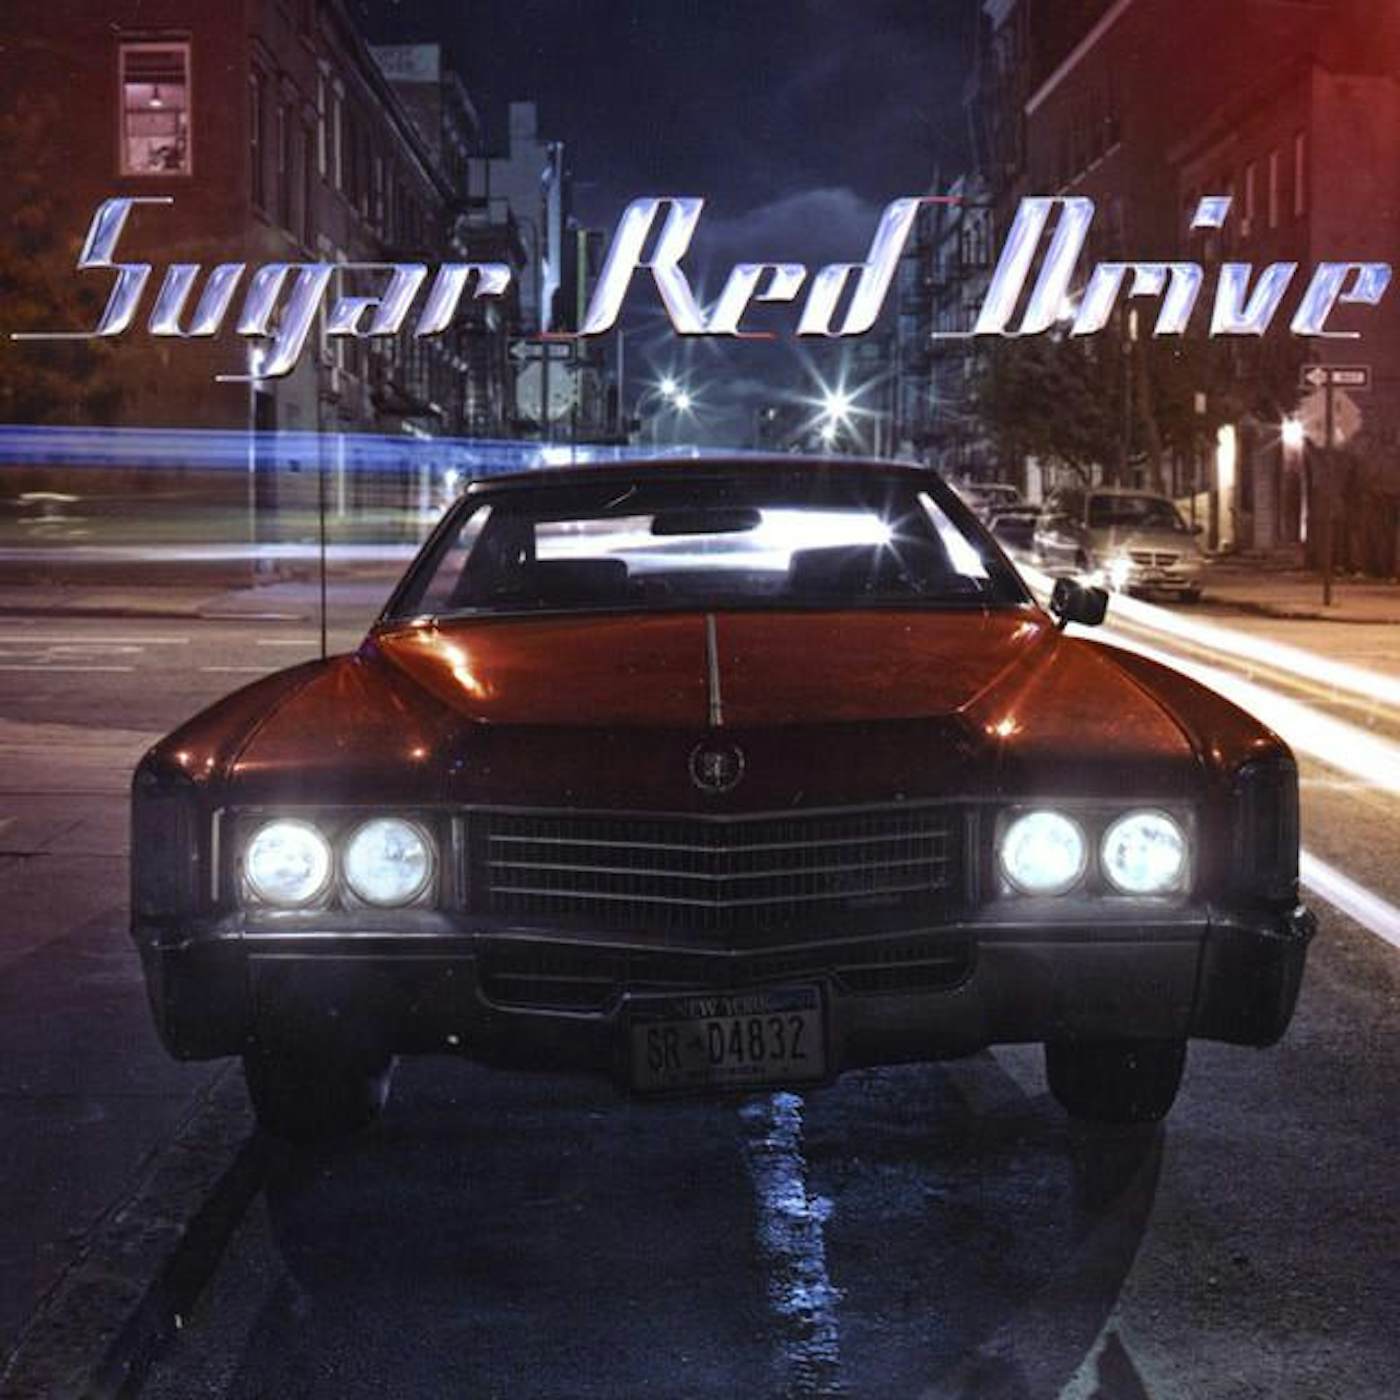 Sugar Red Drive